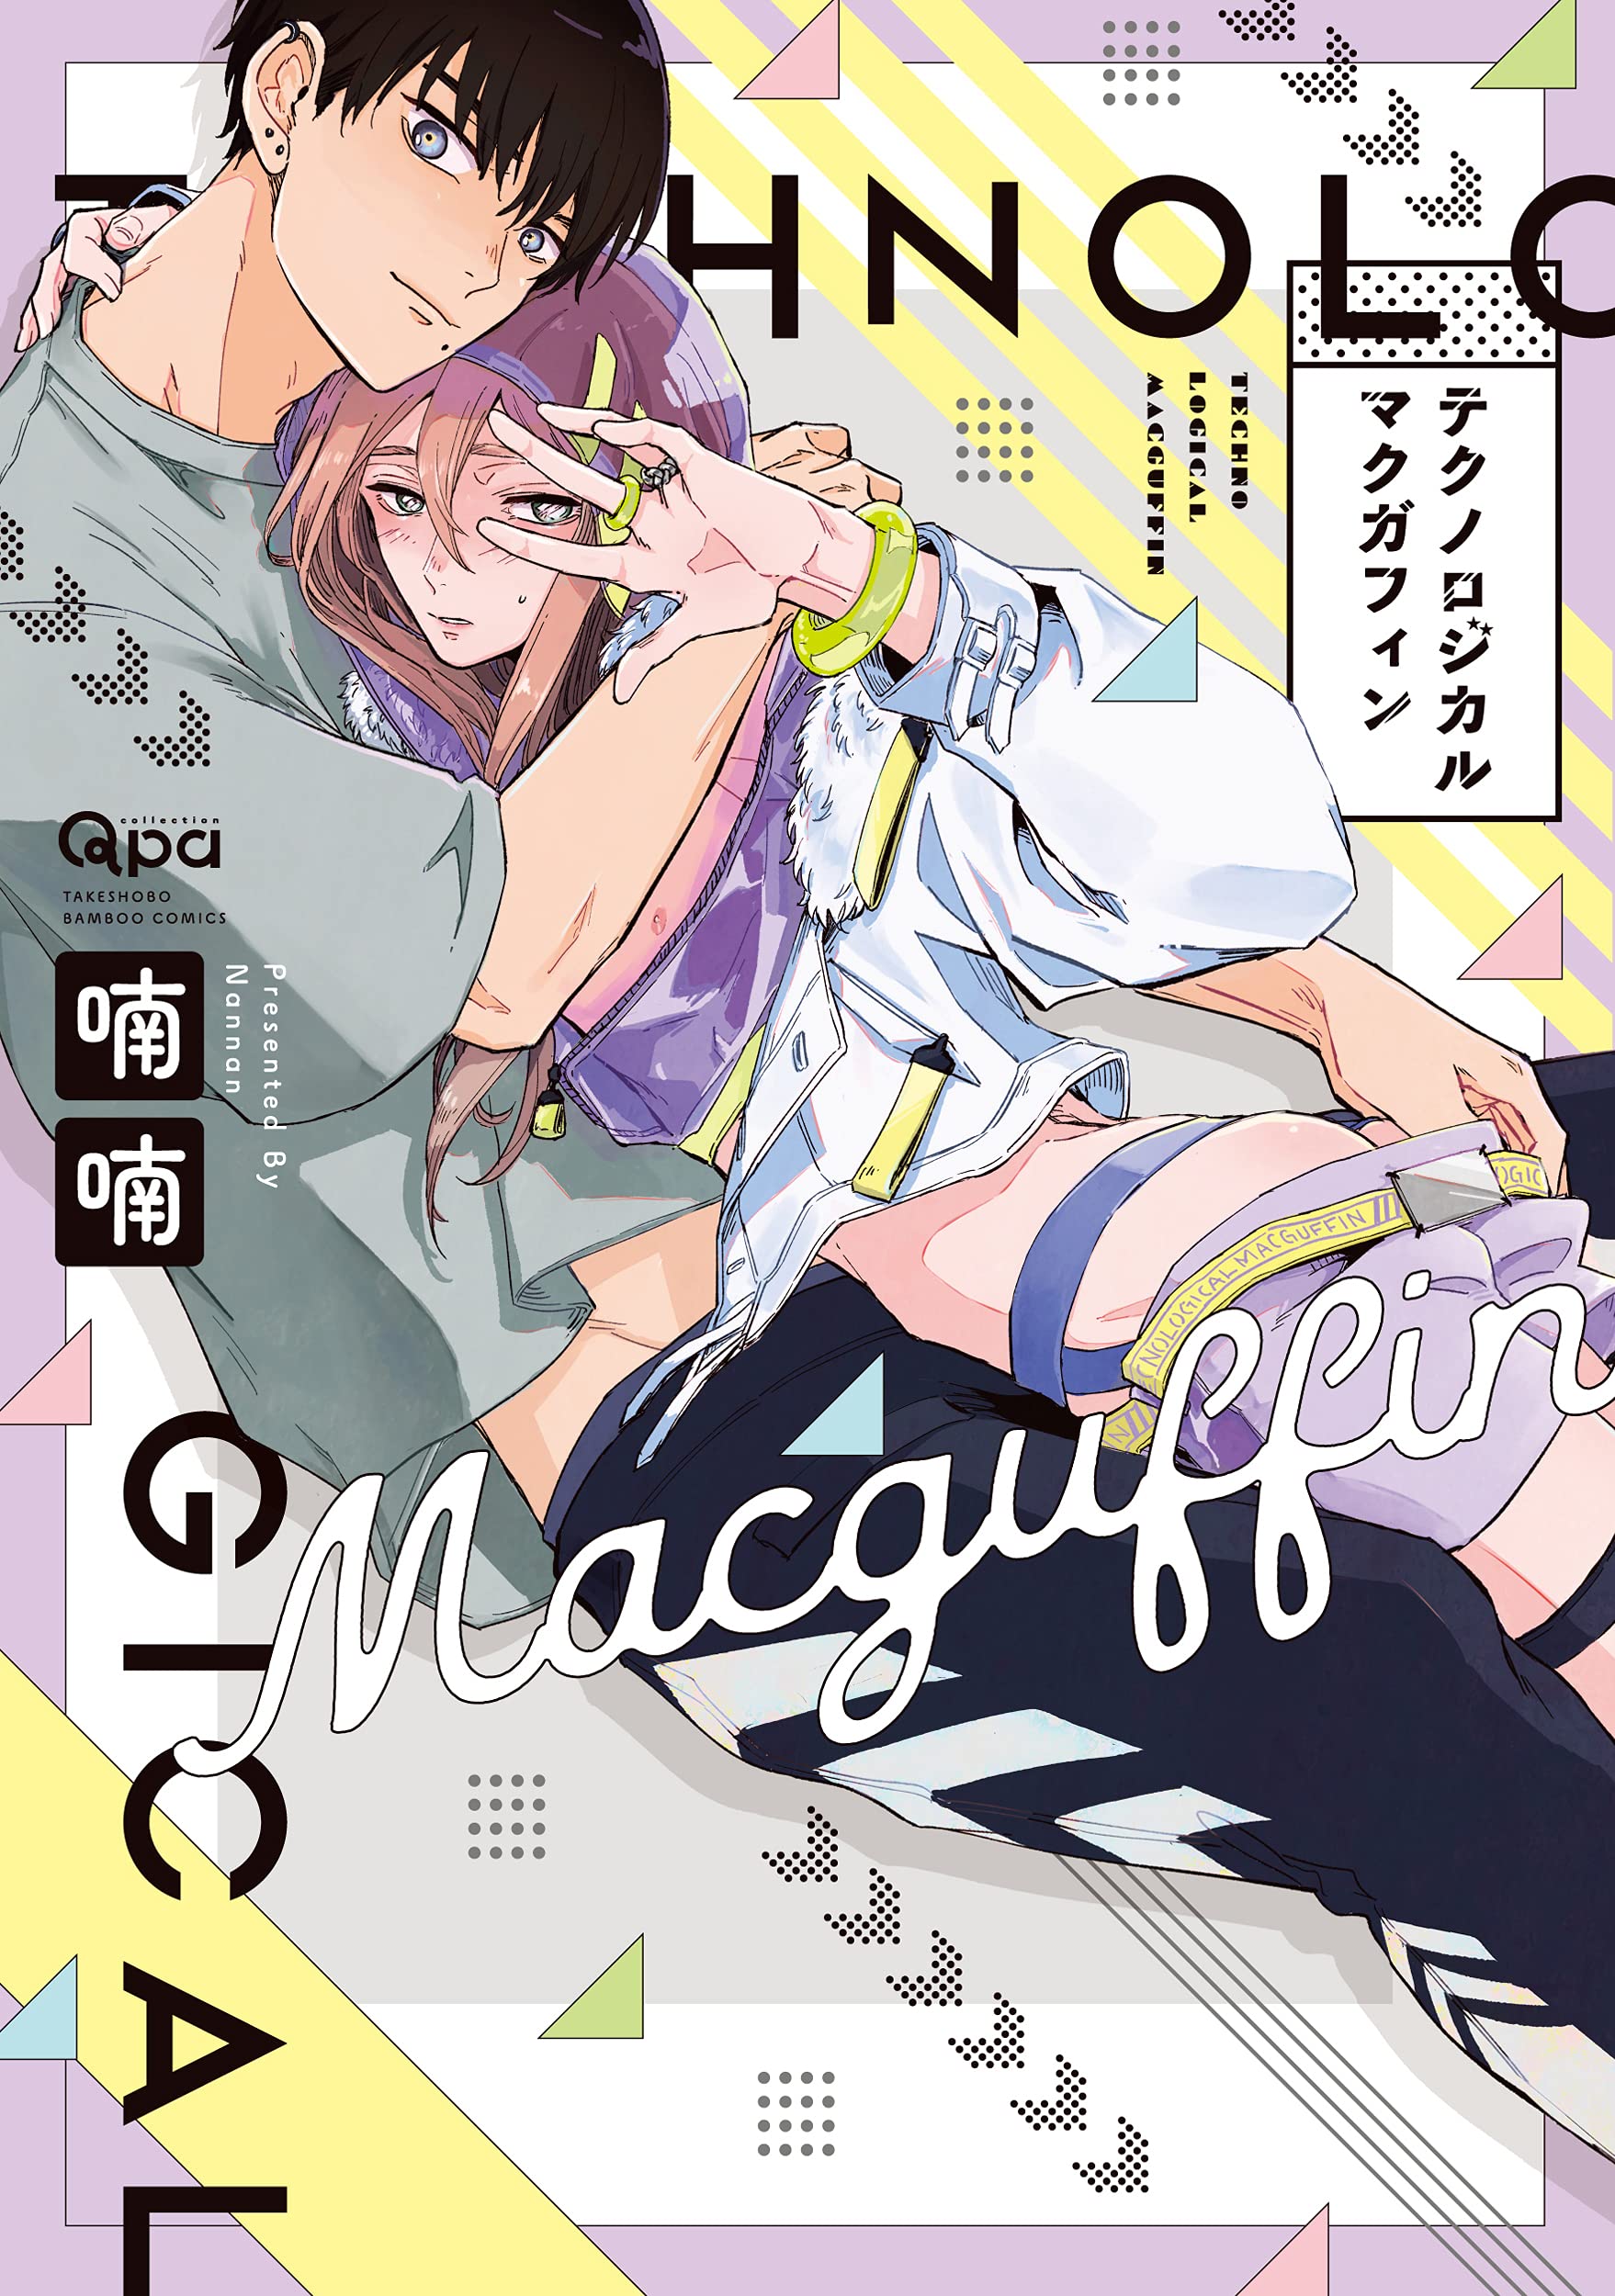 Boys Love (Yaoi) Comics - Technological MacGuffin (テクノロジカルマクガフィン (バンブー・コミックス Qpa collection)) / Nan Nan